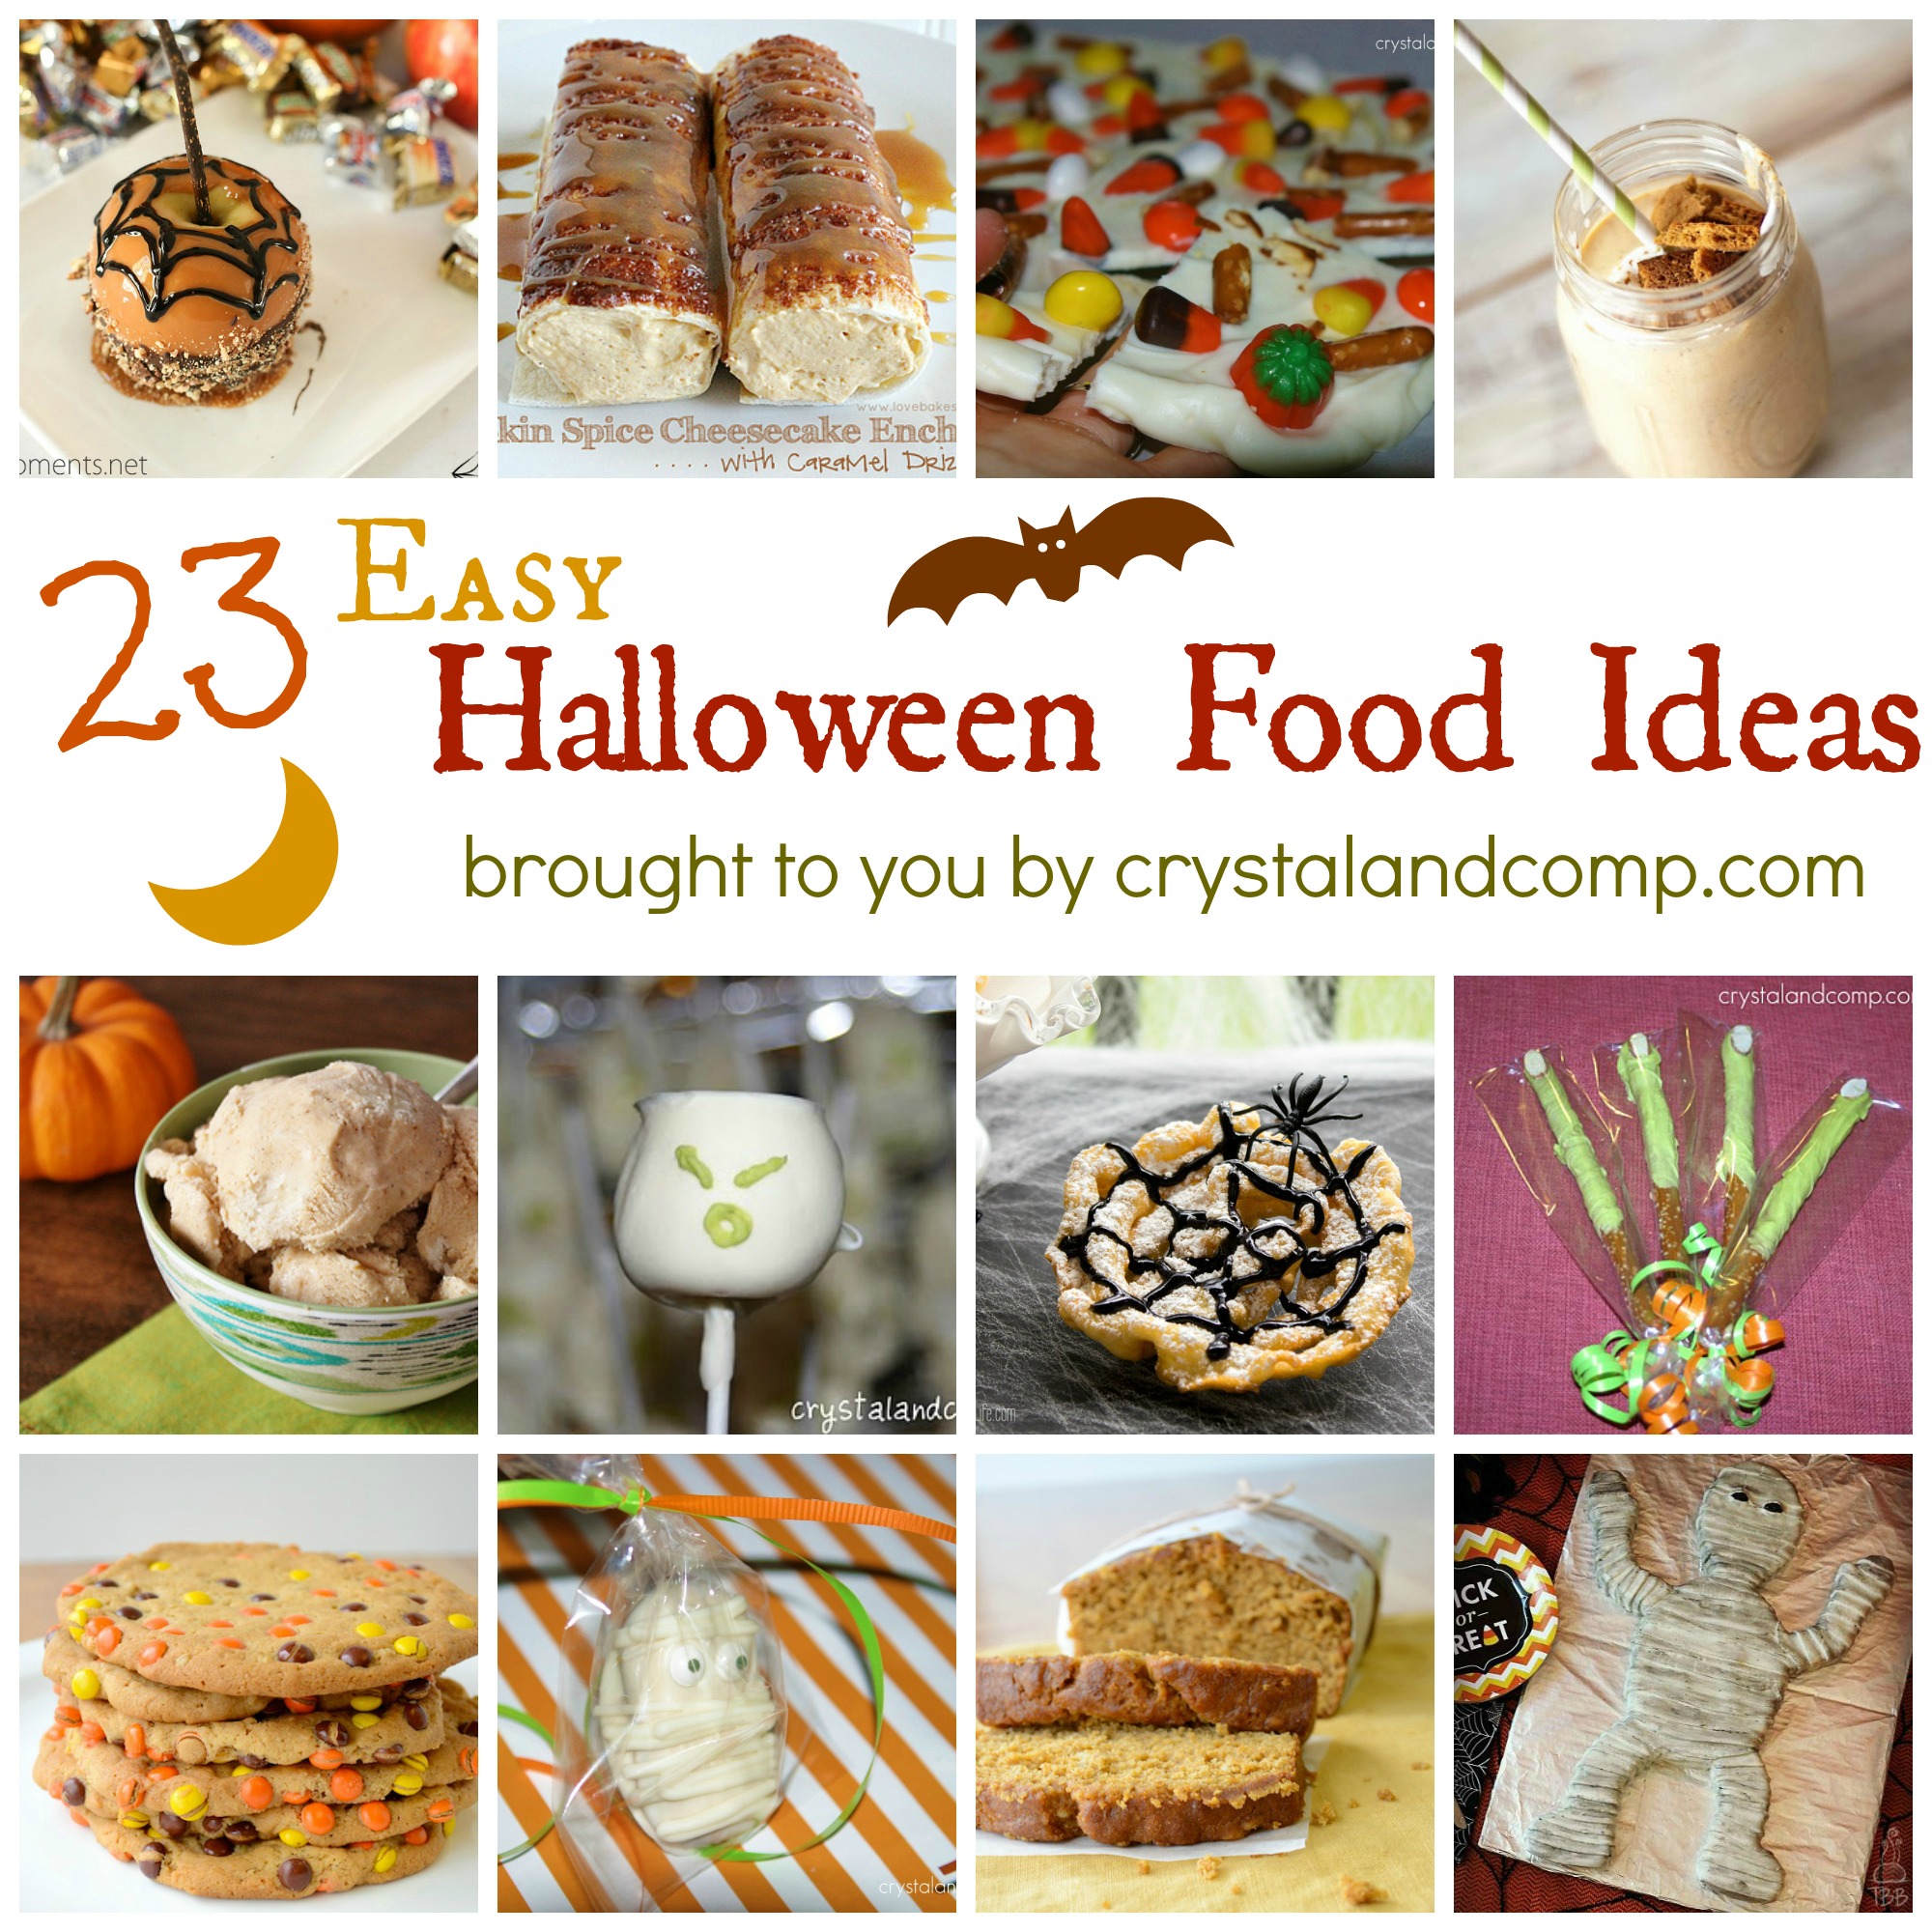 23 Easy Halloween Food Ideas